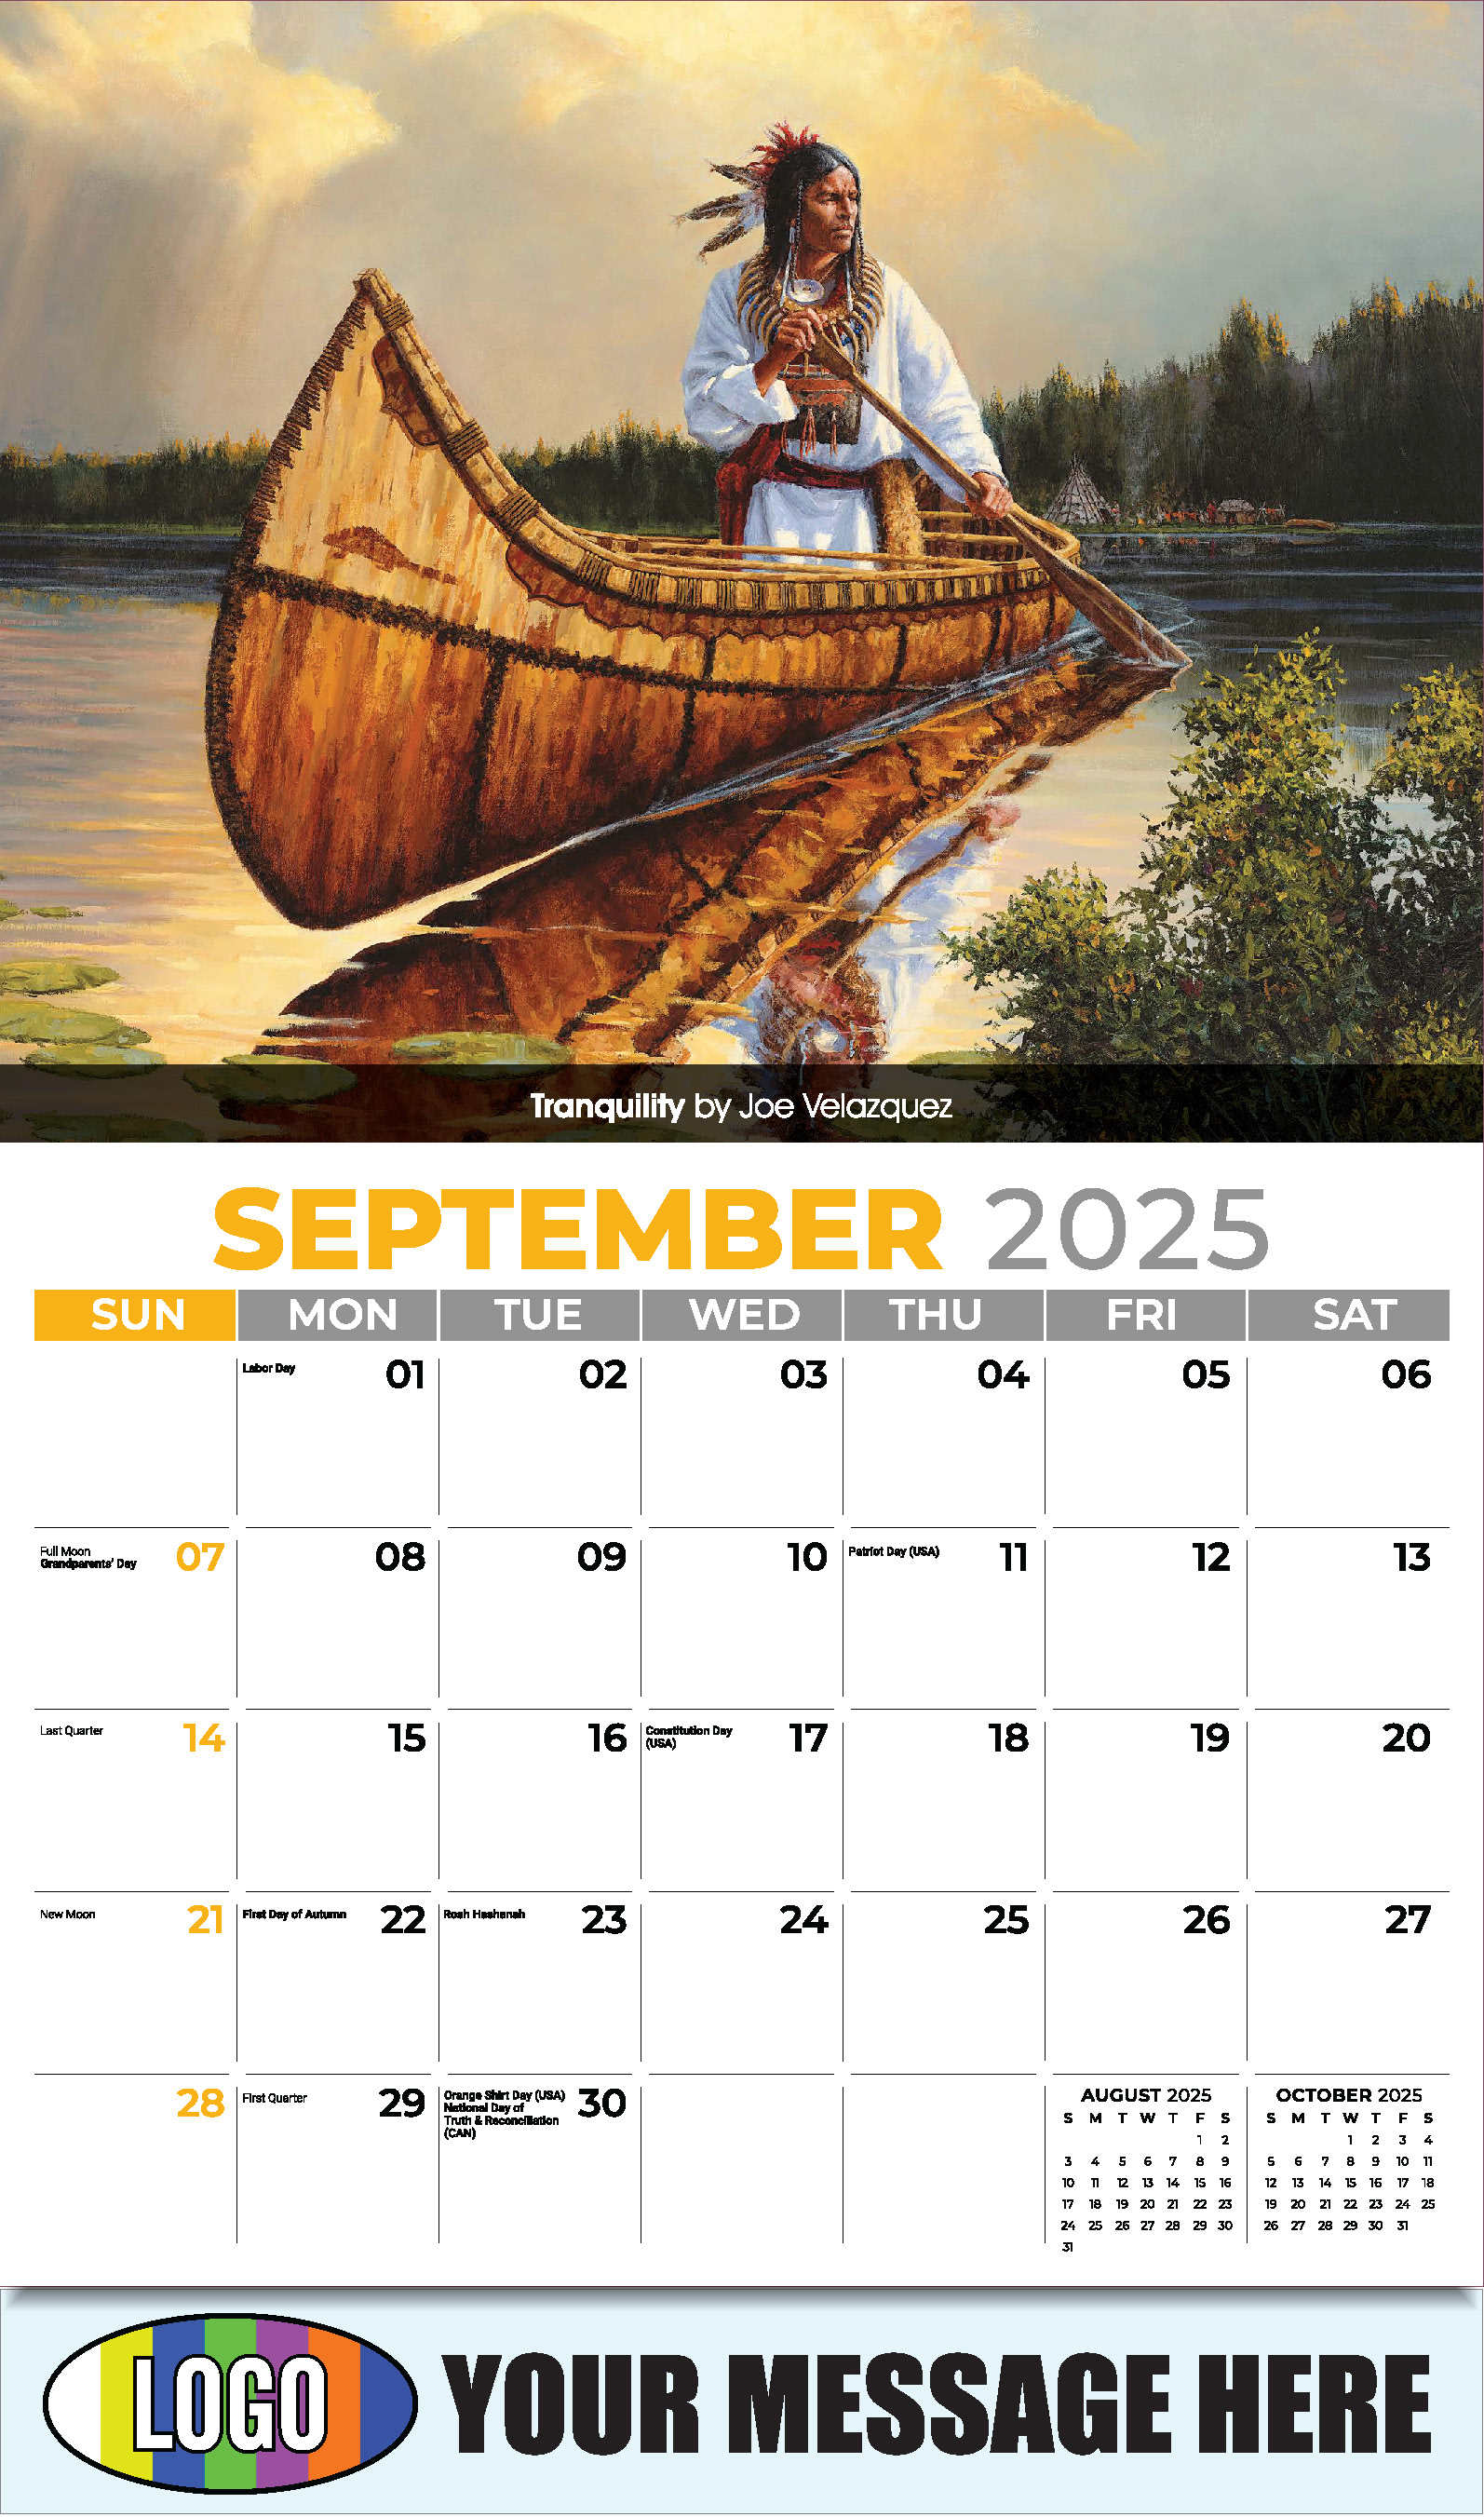 Spirit of the Old West 2025 Old West Art Business Promo Wall Calendar - September